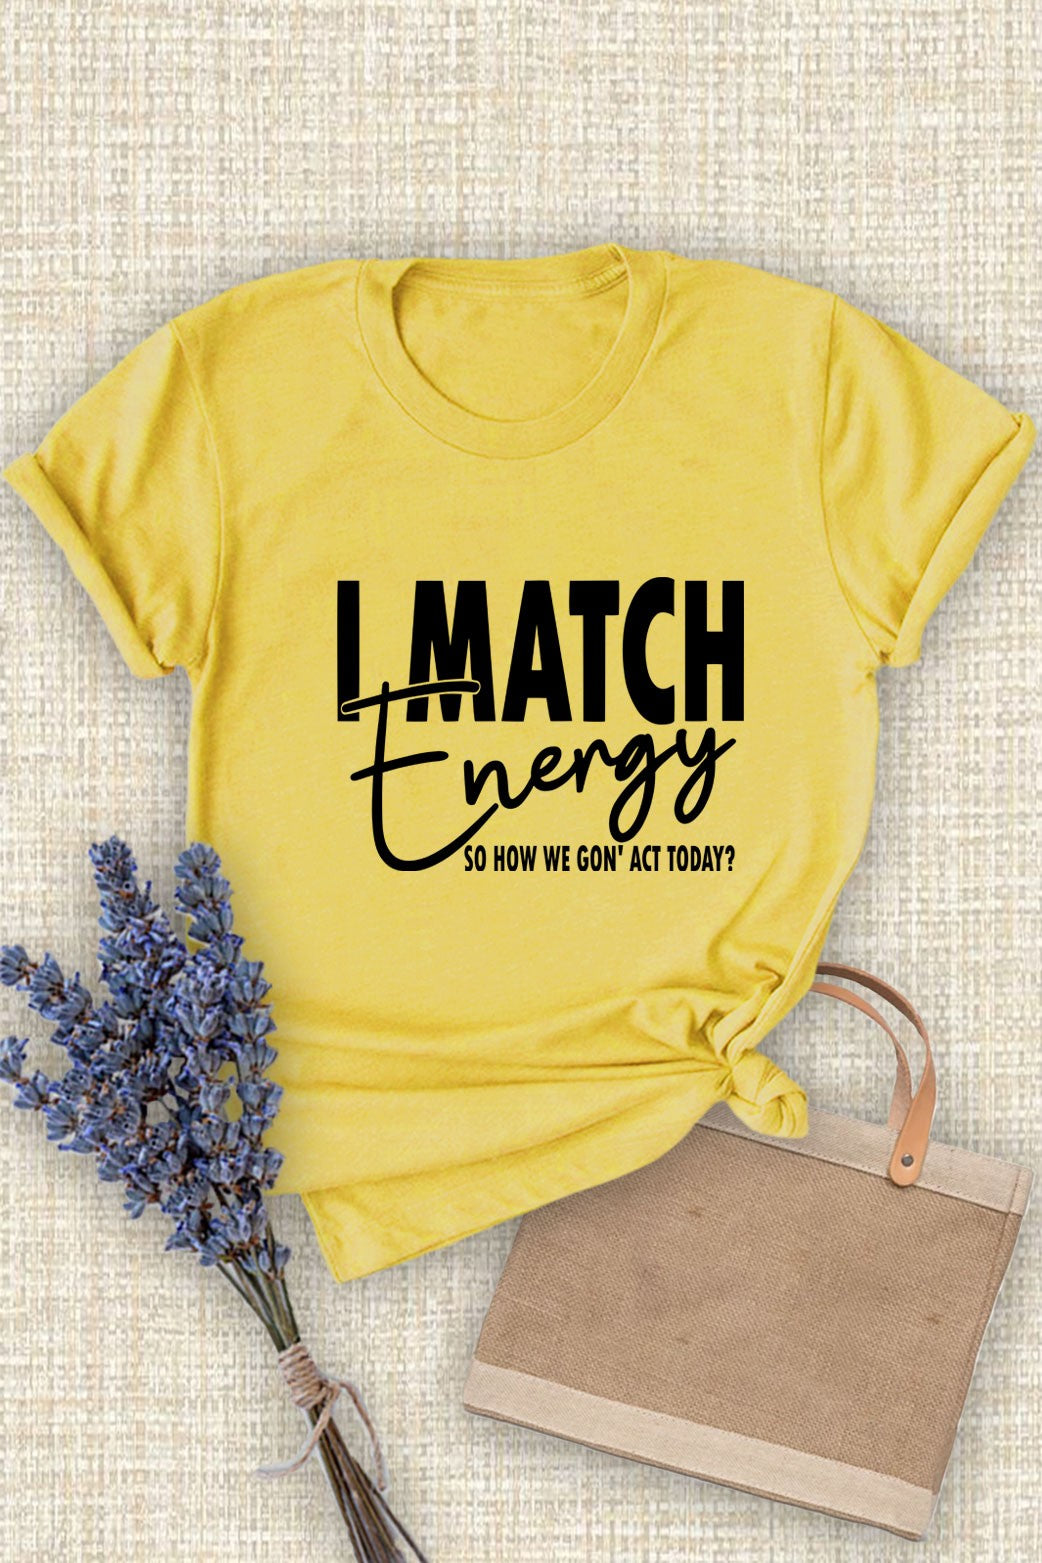 I Match Energy Top